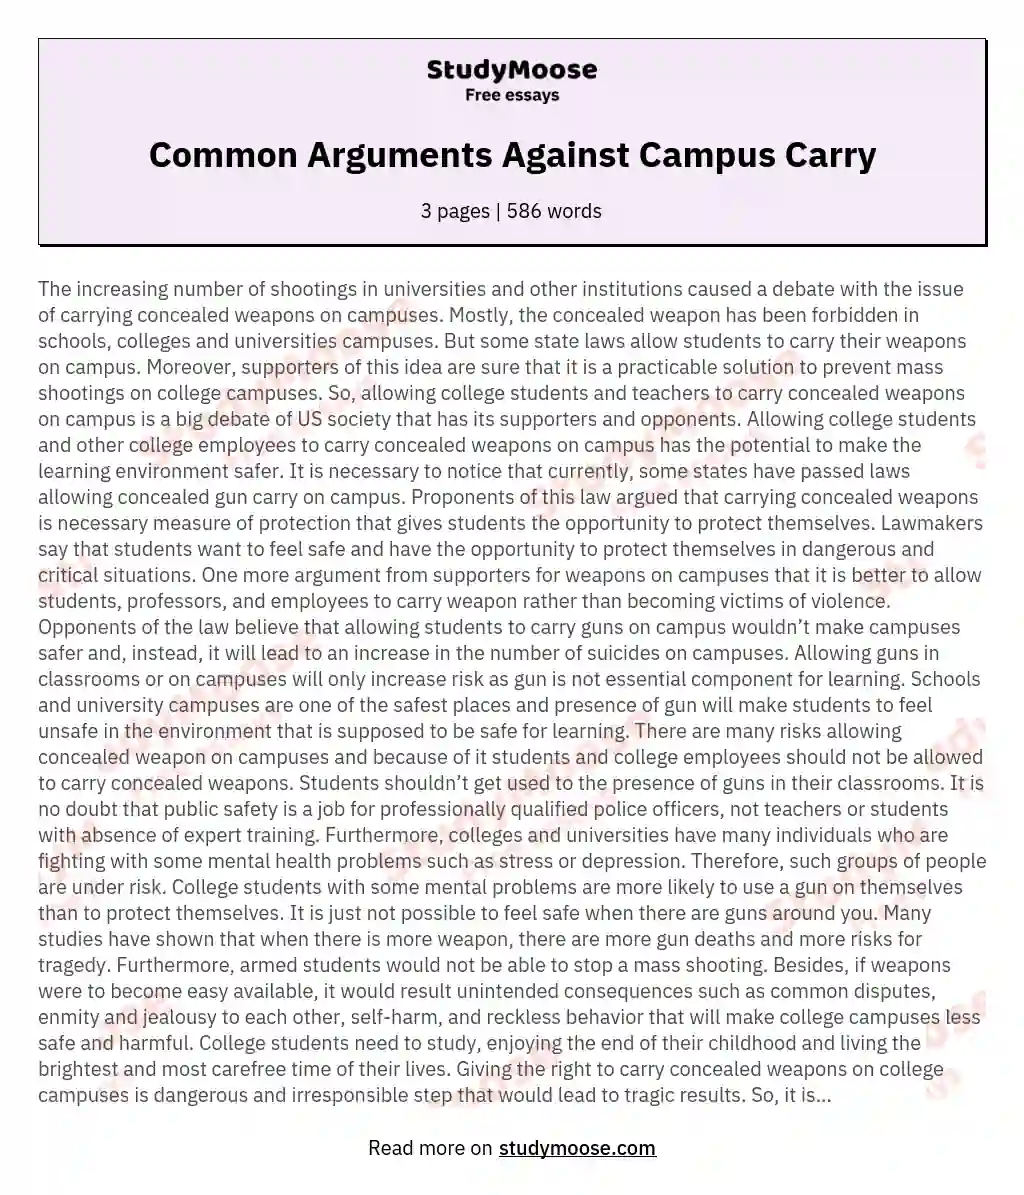 Common Arguments Against Campus Carry